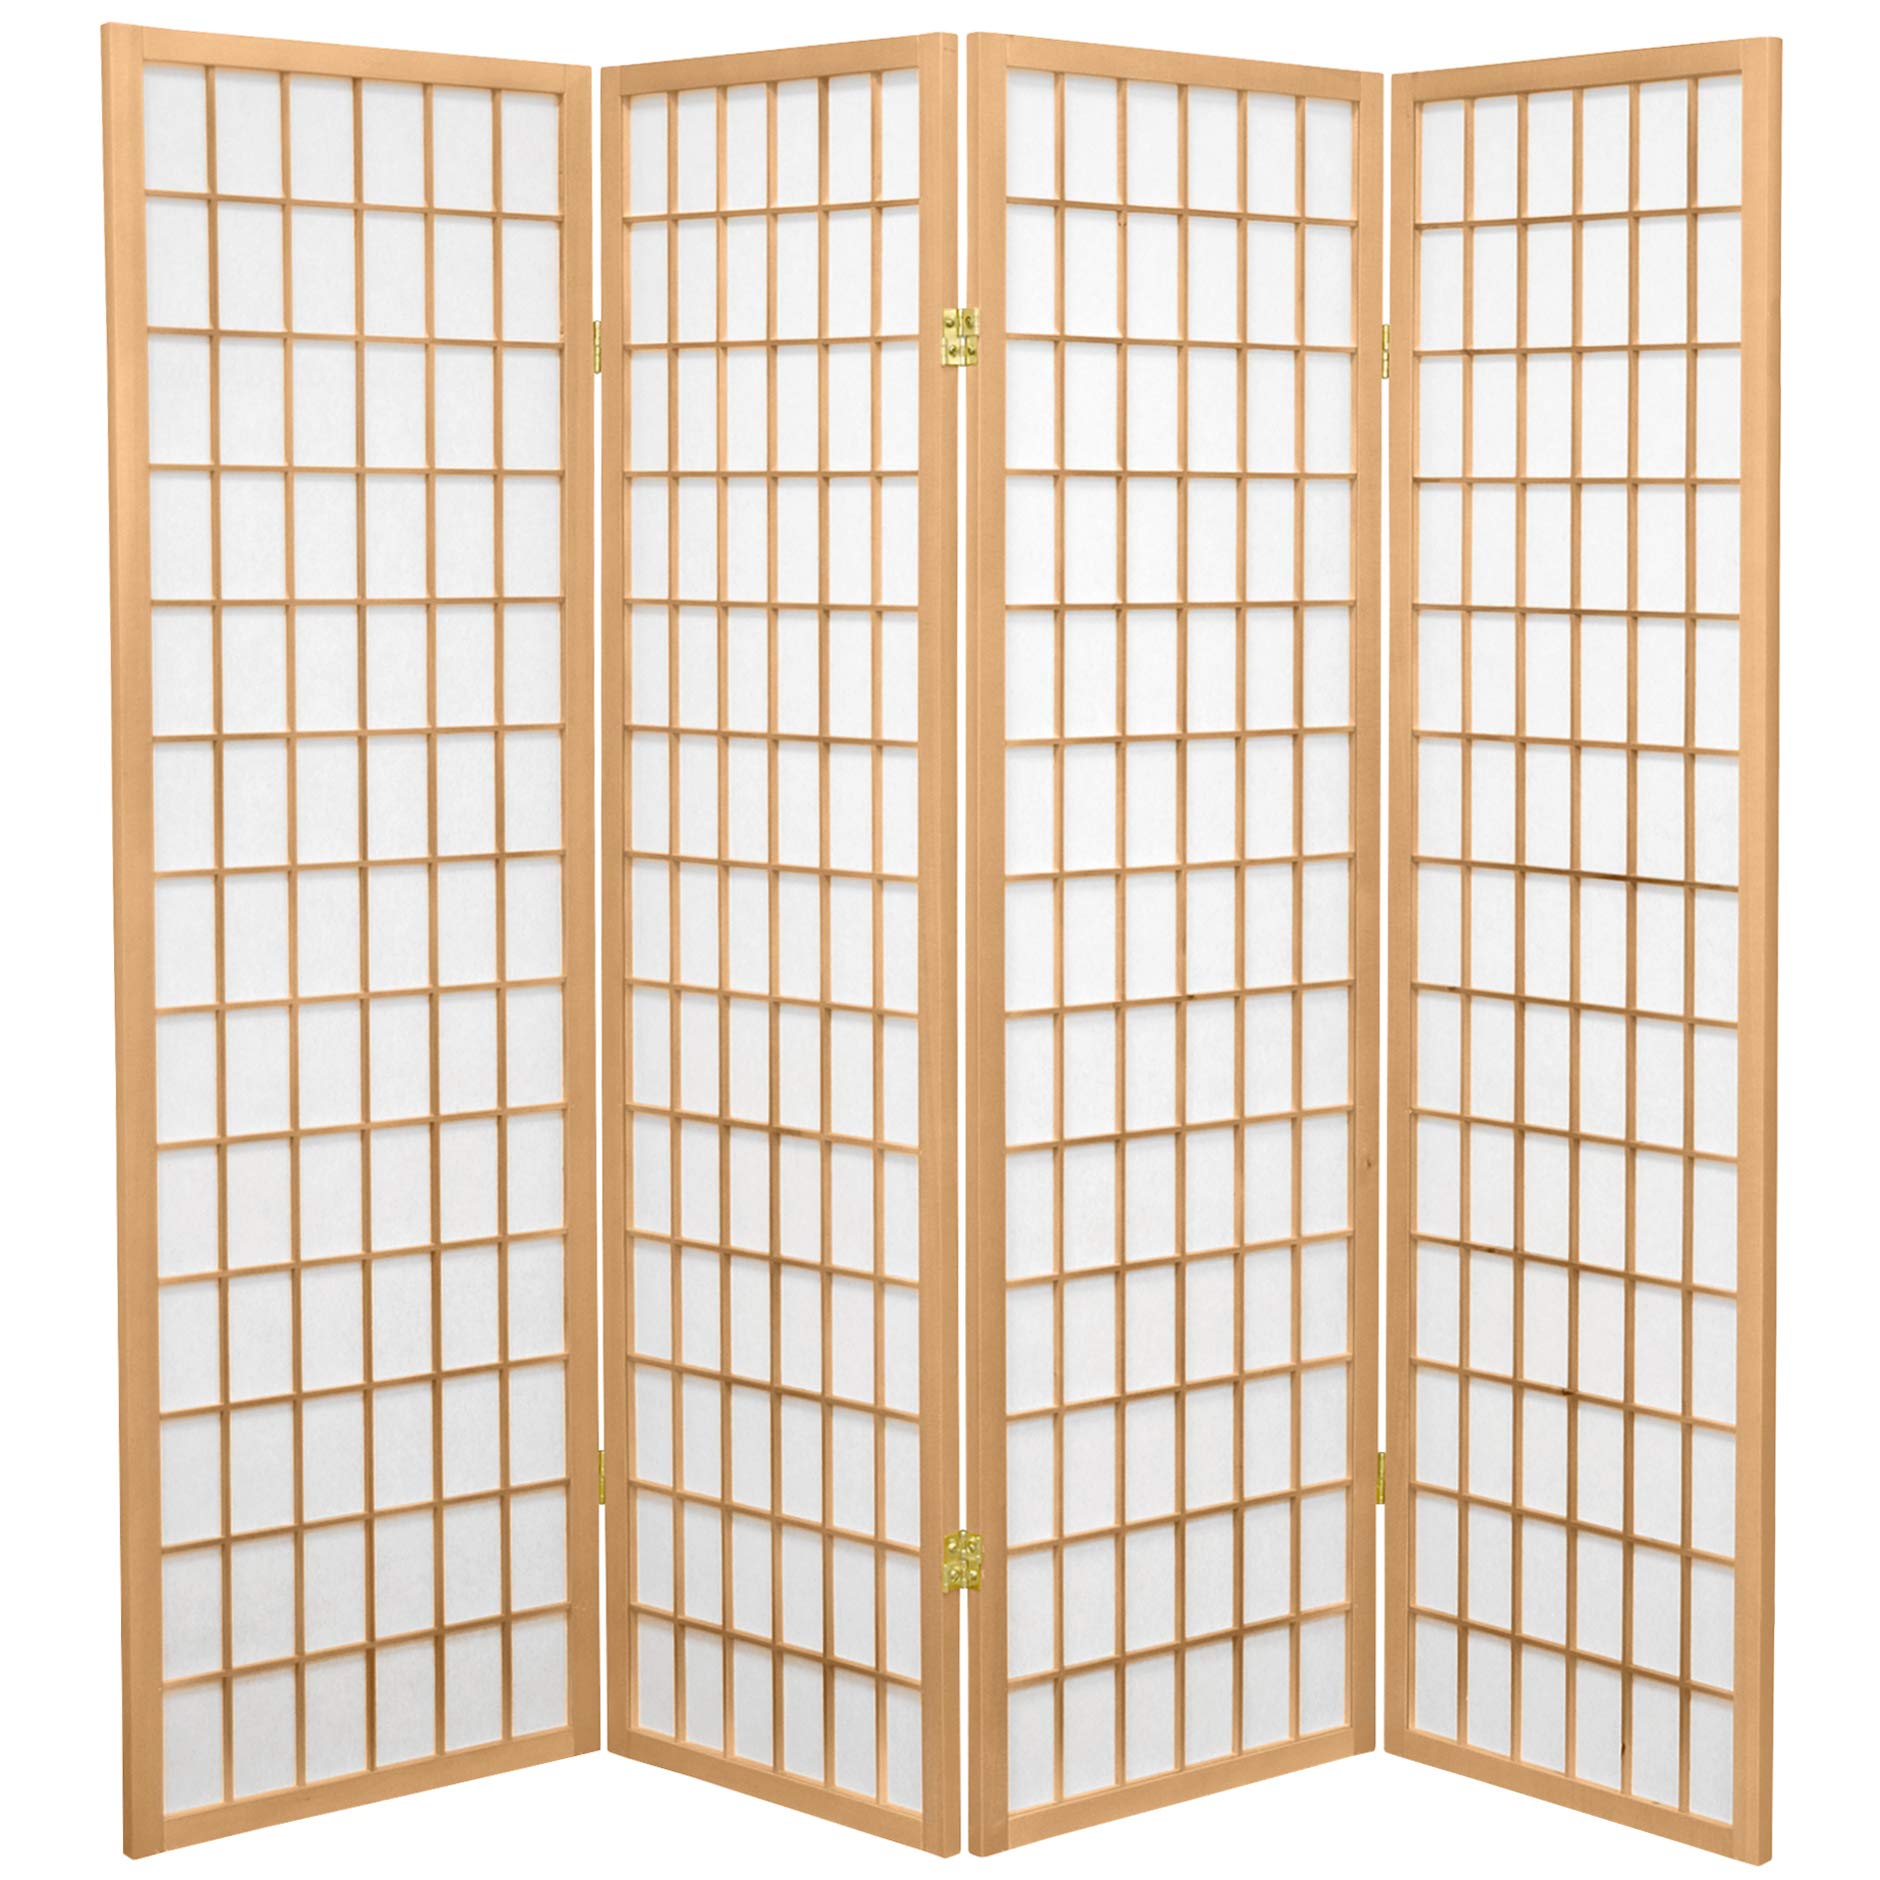 Oriental Furniture 5 ft. Tall Window Pane Shoji Screen - Natural - 4 Panels